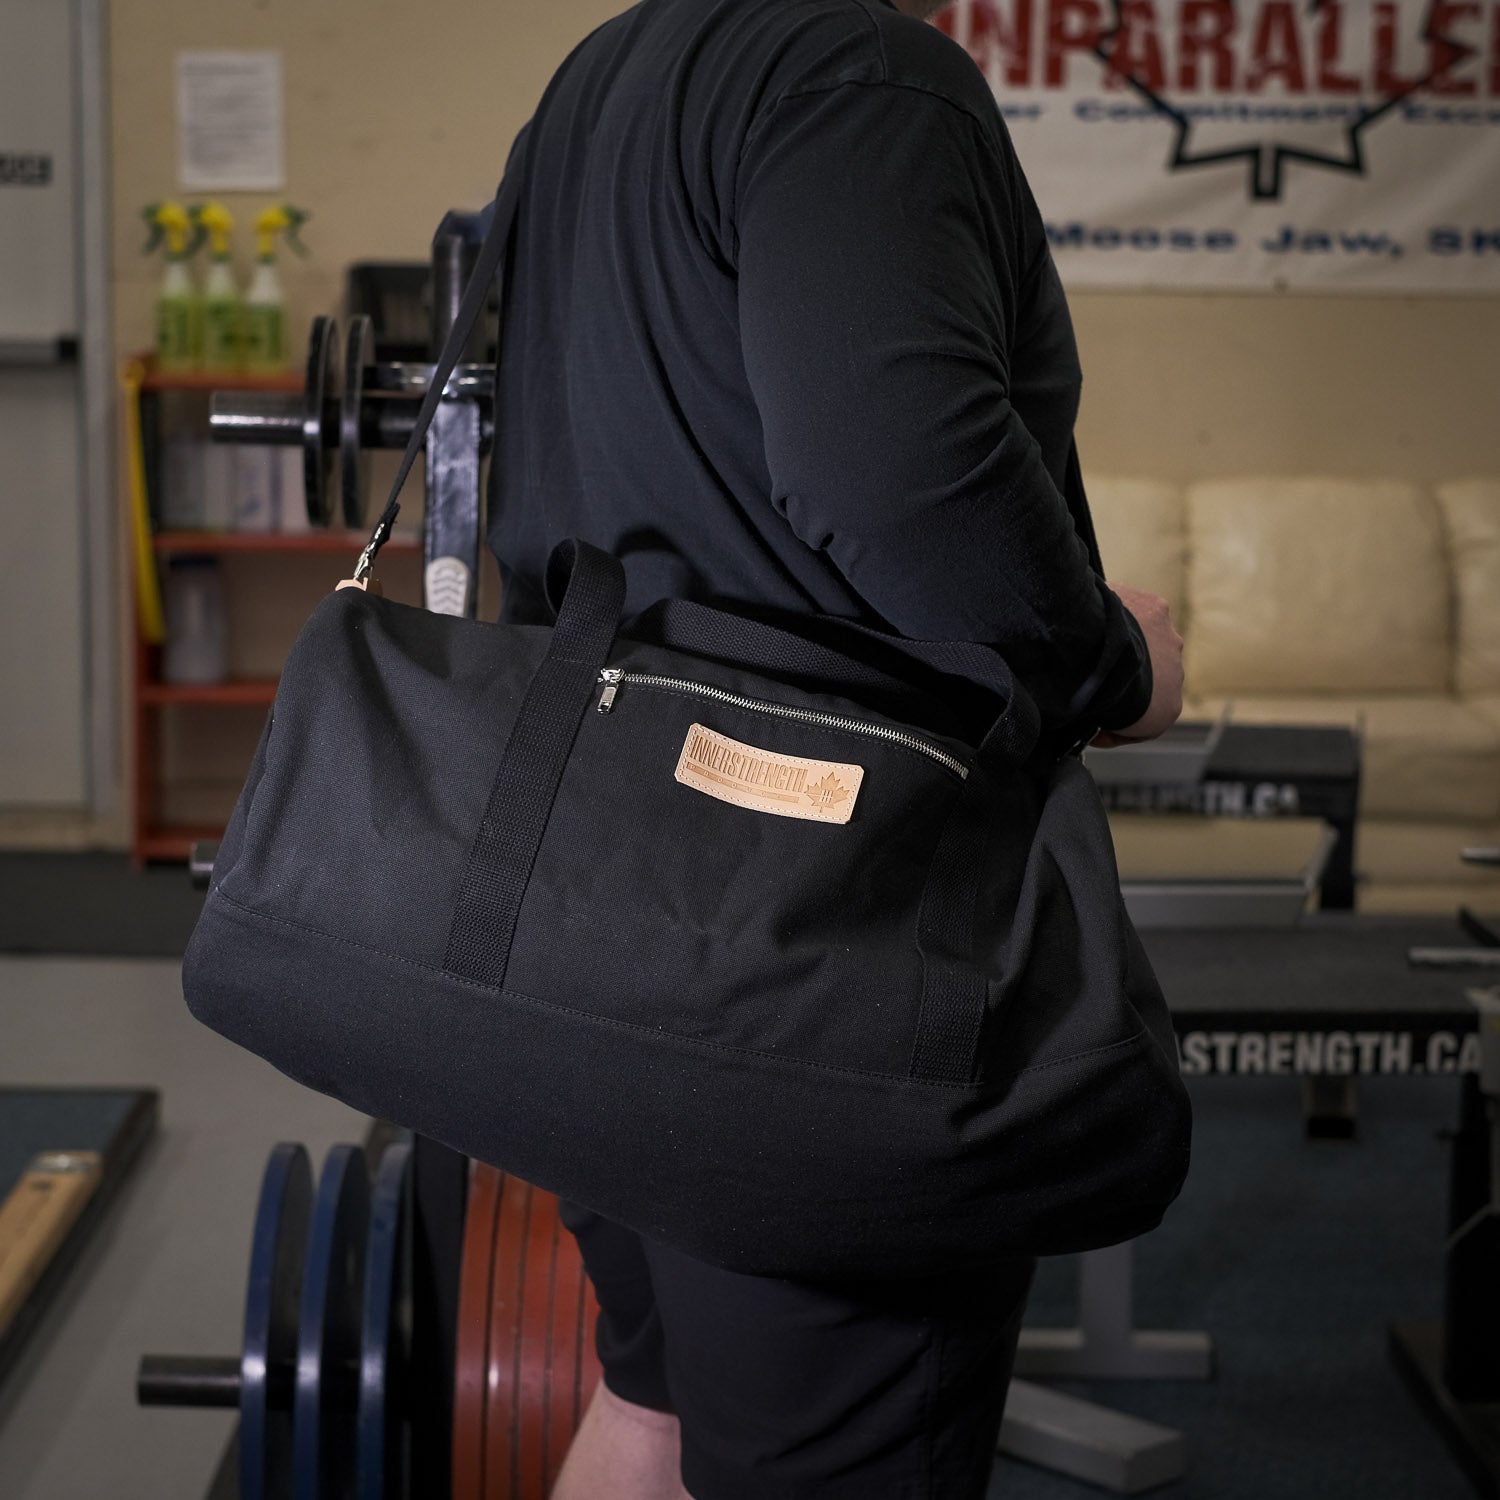 Hit Fitness Strength Bag — McSport